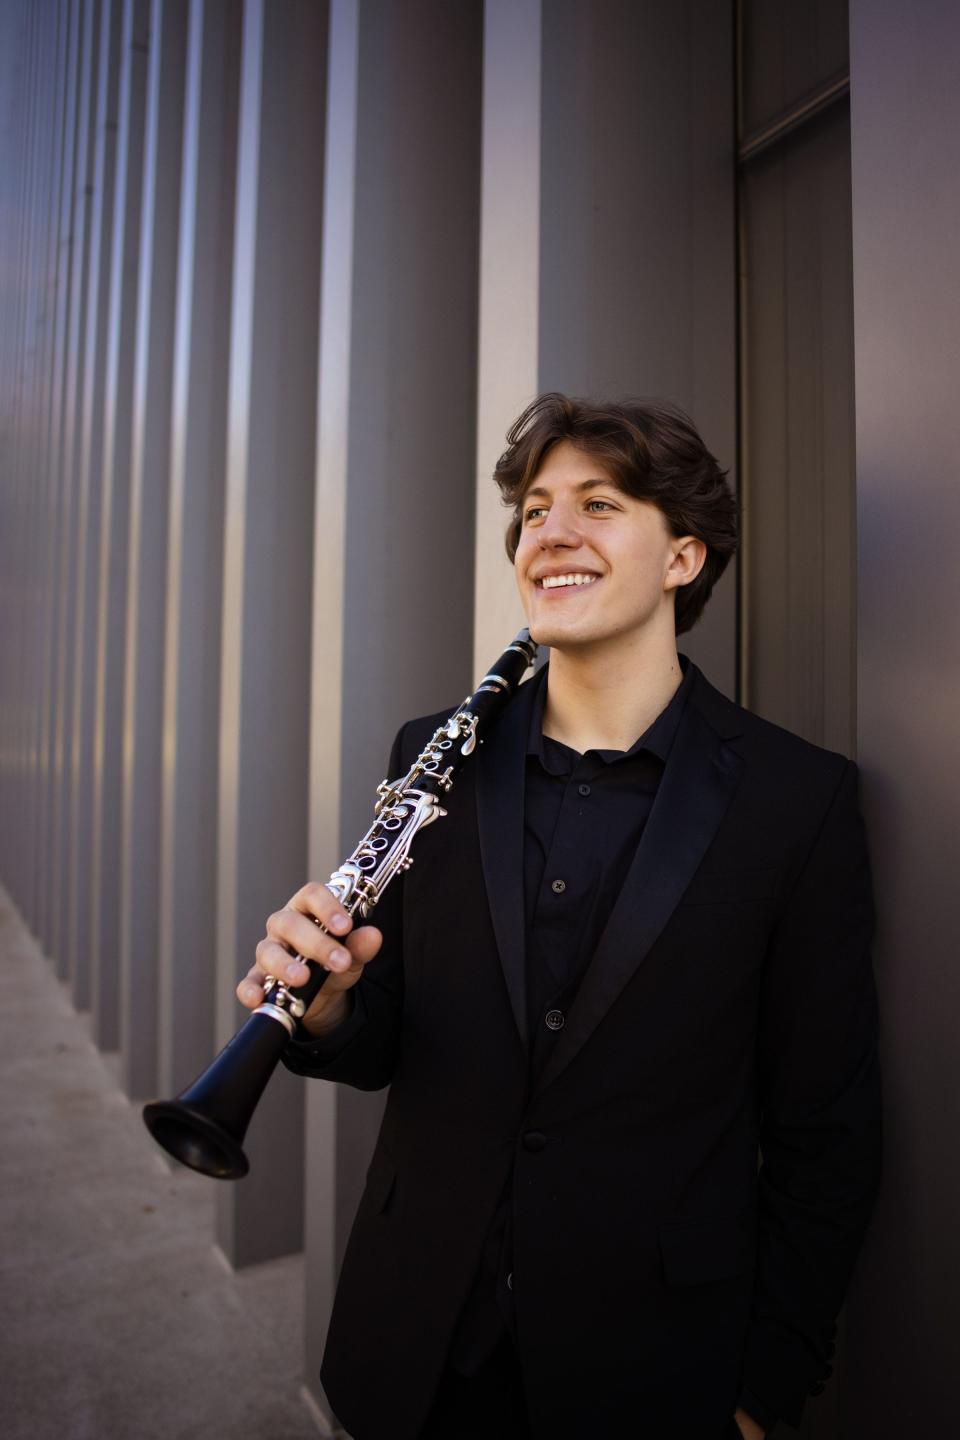 Special guest artist Nickolas Hamblin will perform Aaron Copland’s Clarinet Concerto.